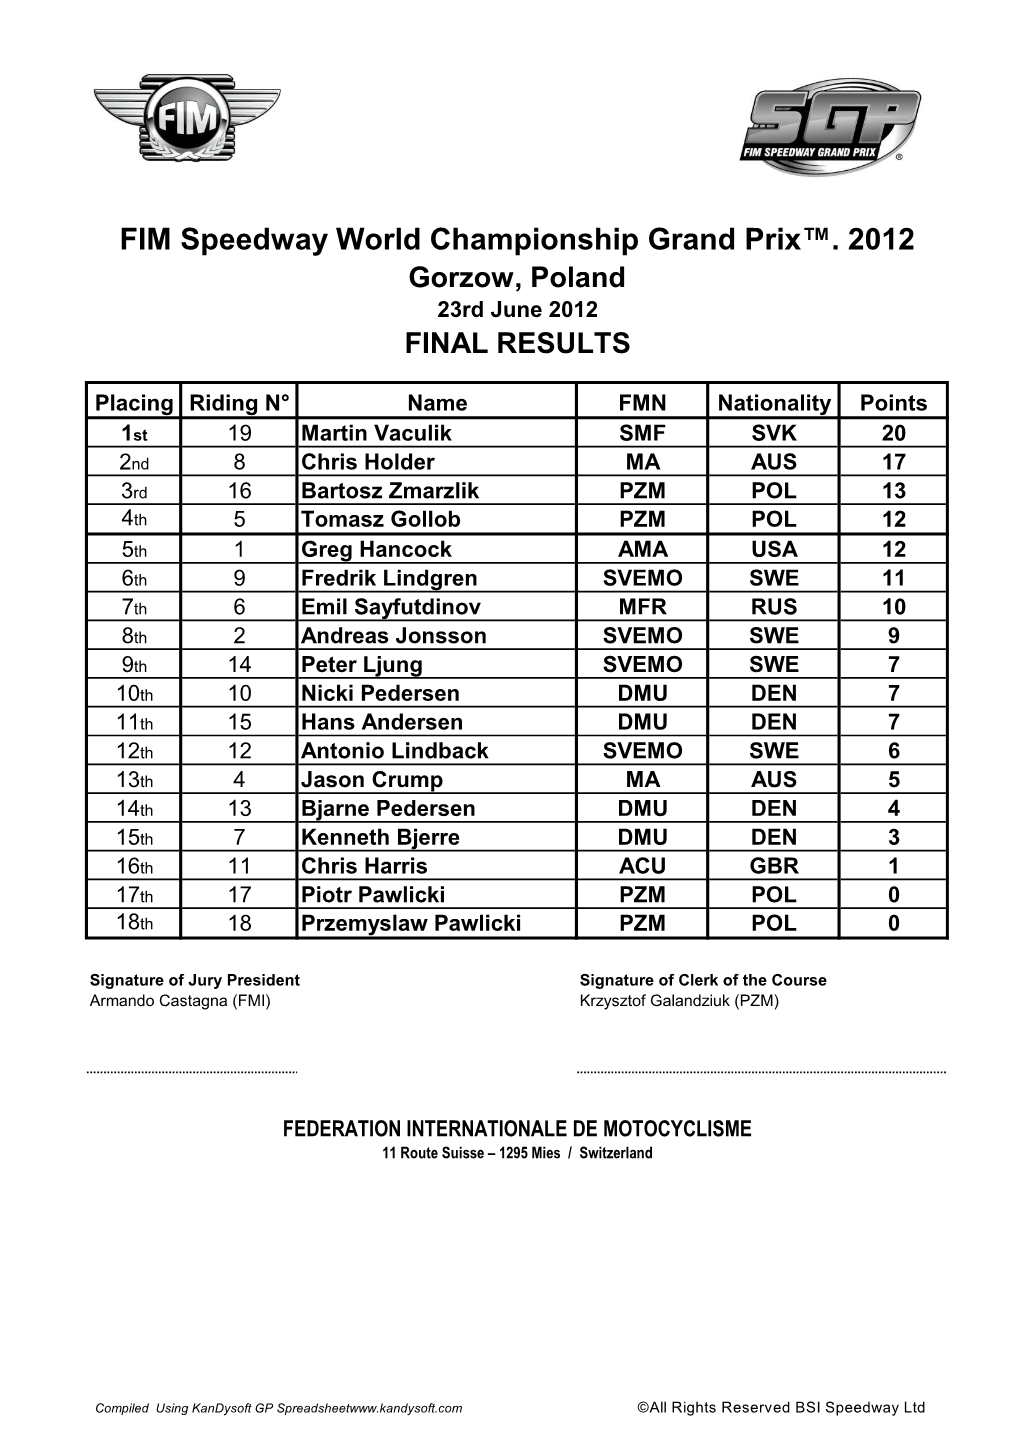 FIM Speedway World Championship Grand Prix™. 2012 Gorzow, Poland 23Rd June 2012 FINAL RESULTS